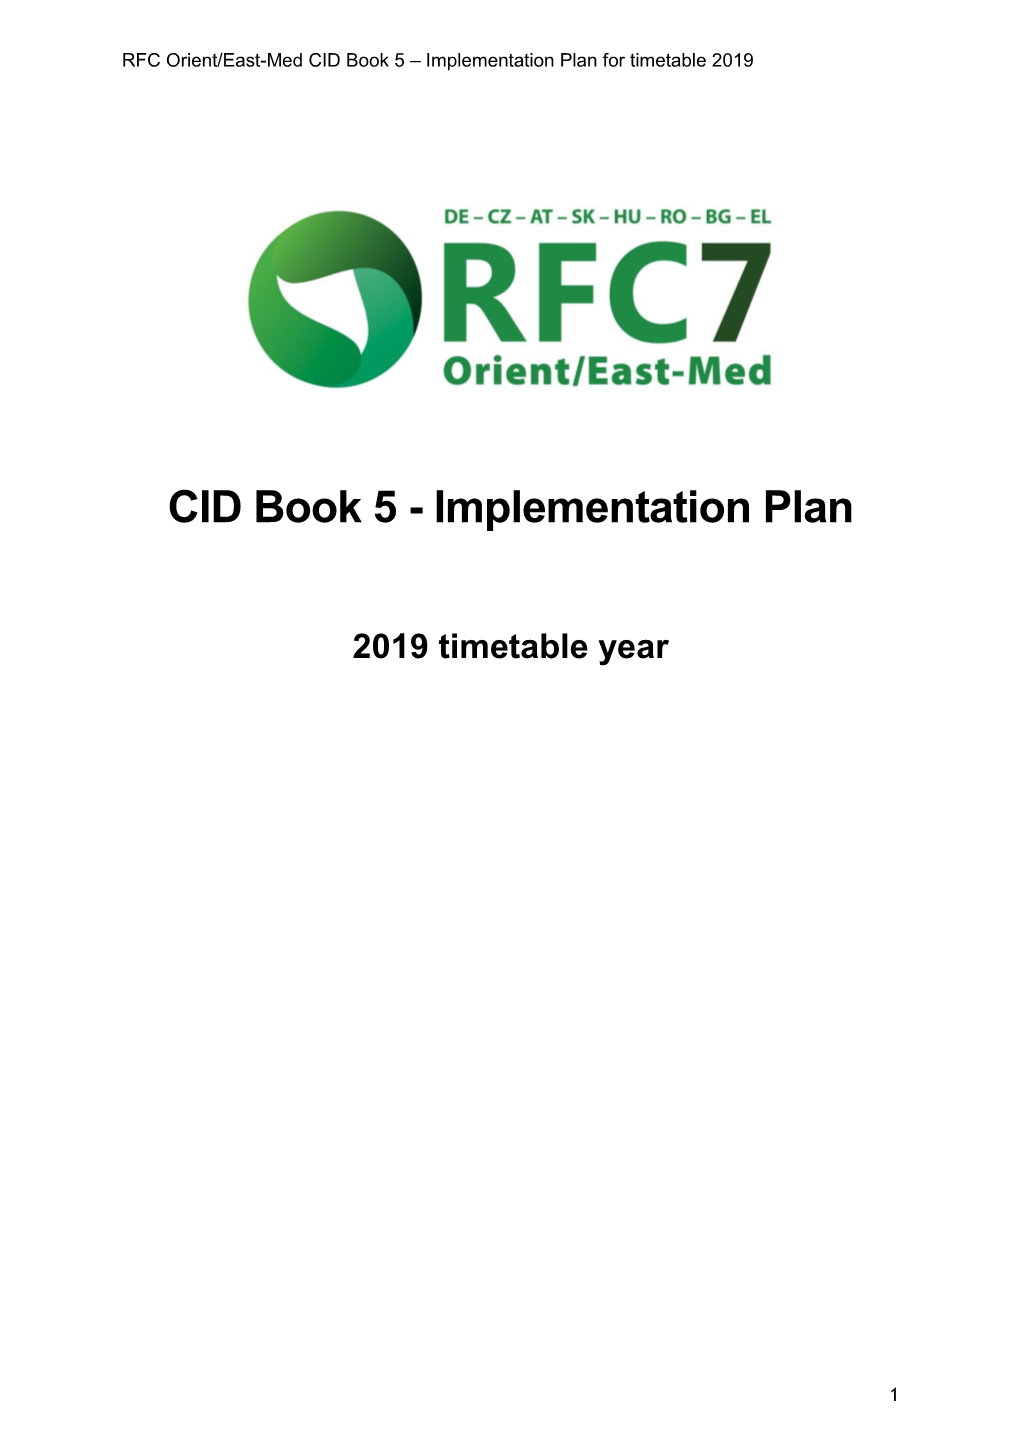 CID Book 5 – Implementation Plan for Timetable 2019